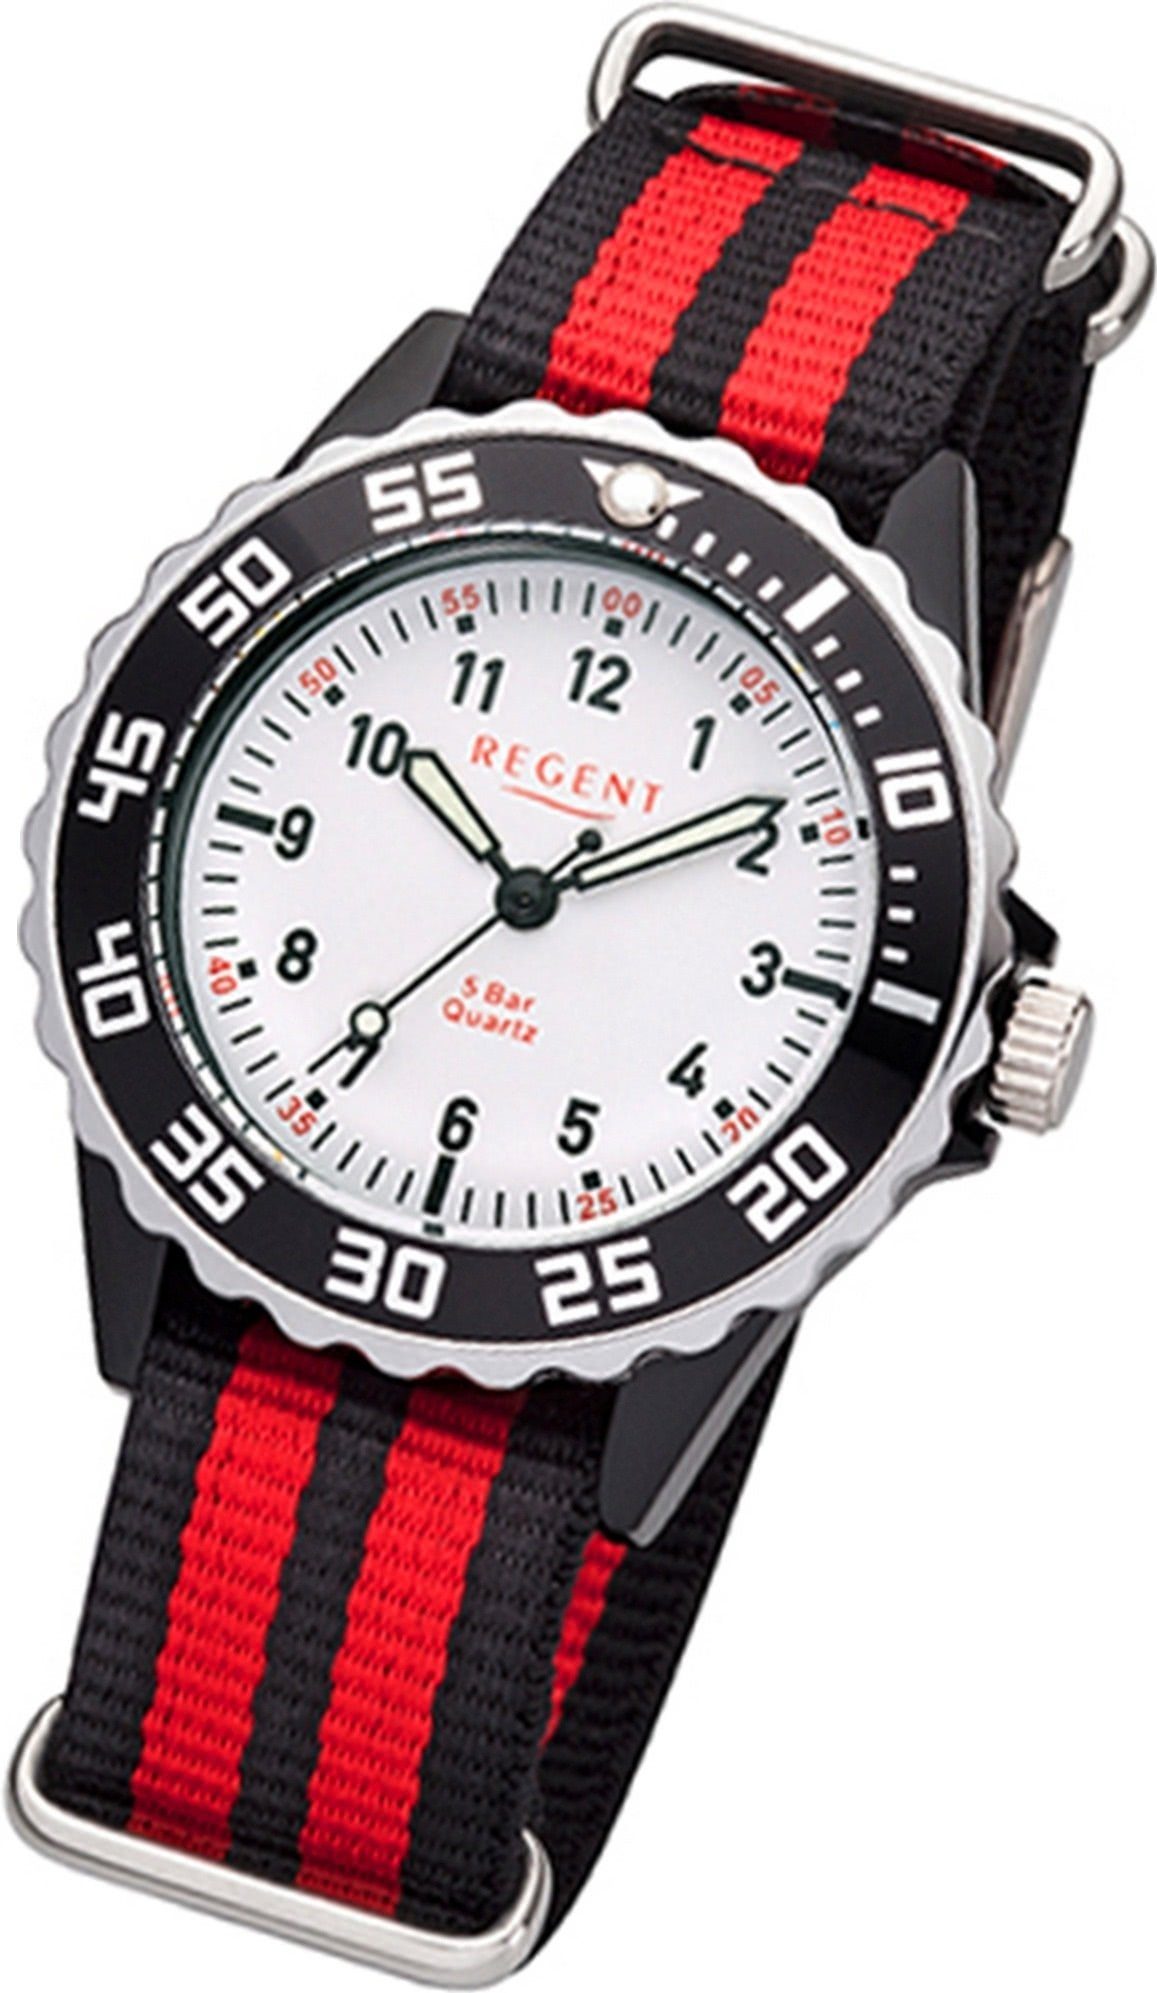 Kinder-Jugend Textil rot, (35mm) mittel schwarz, Textilarmband Gehäuse, Regent Quarzuhr Uhr rundes F-1205, Regent Kinderuhr